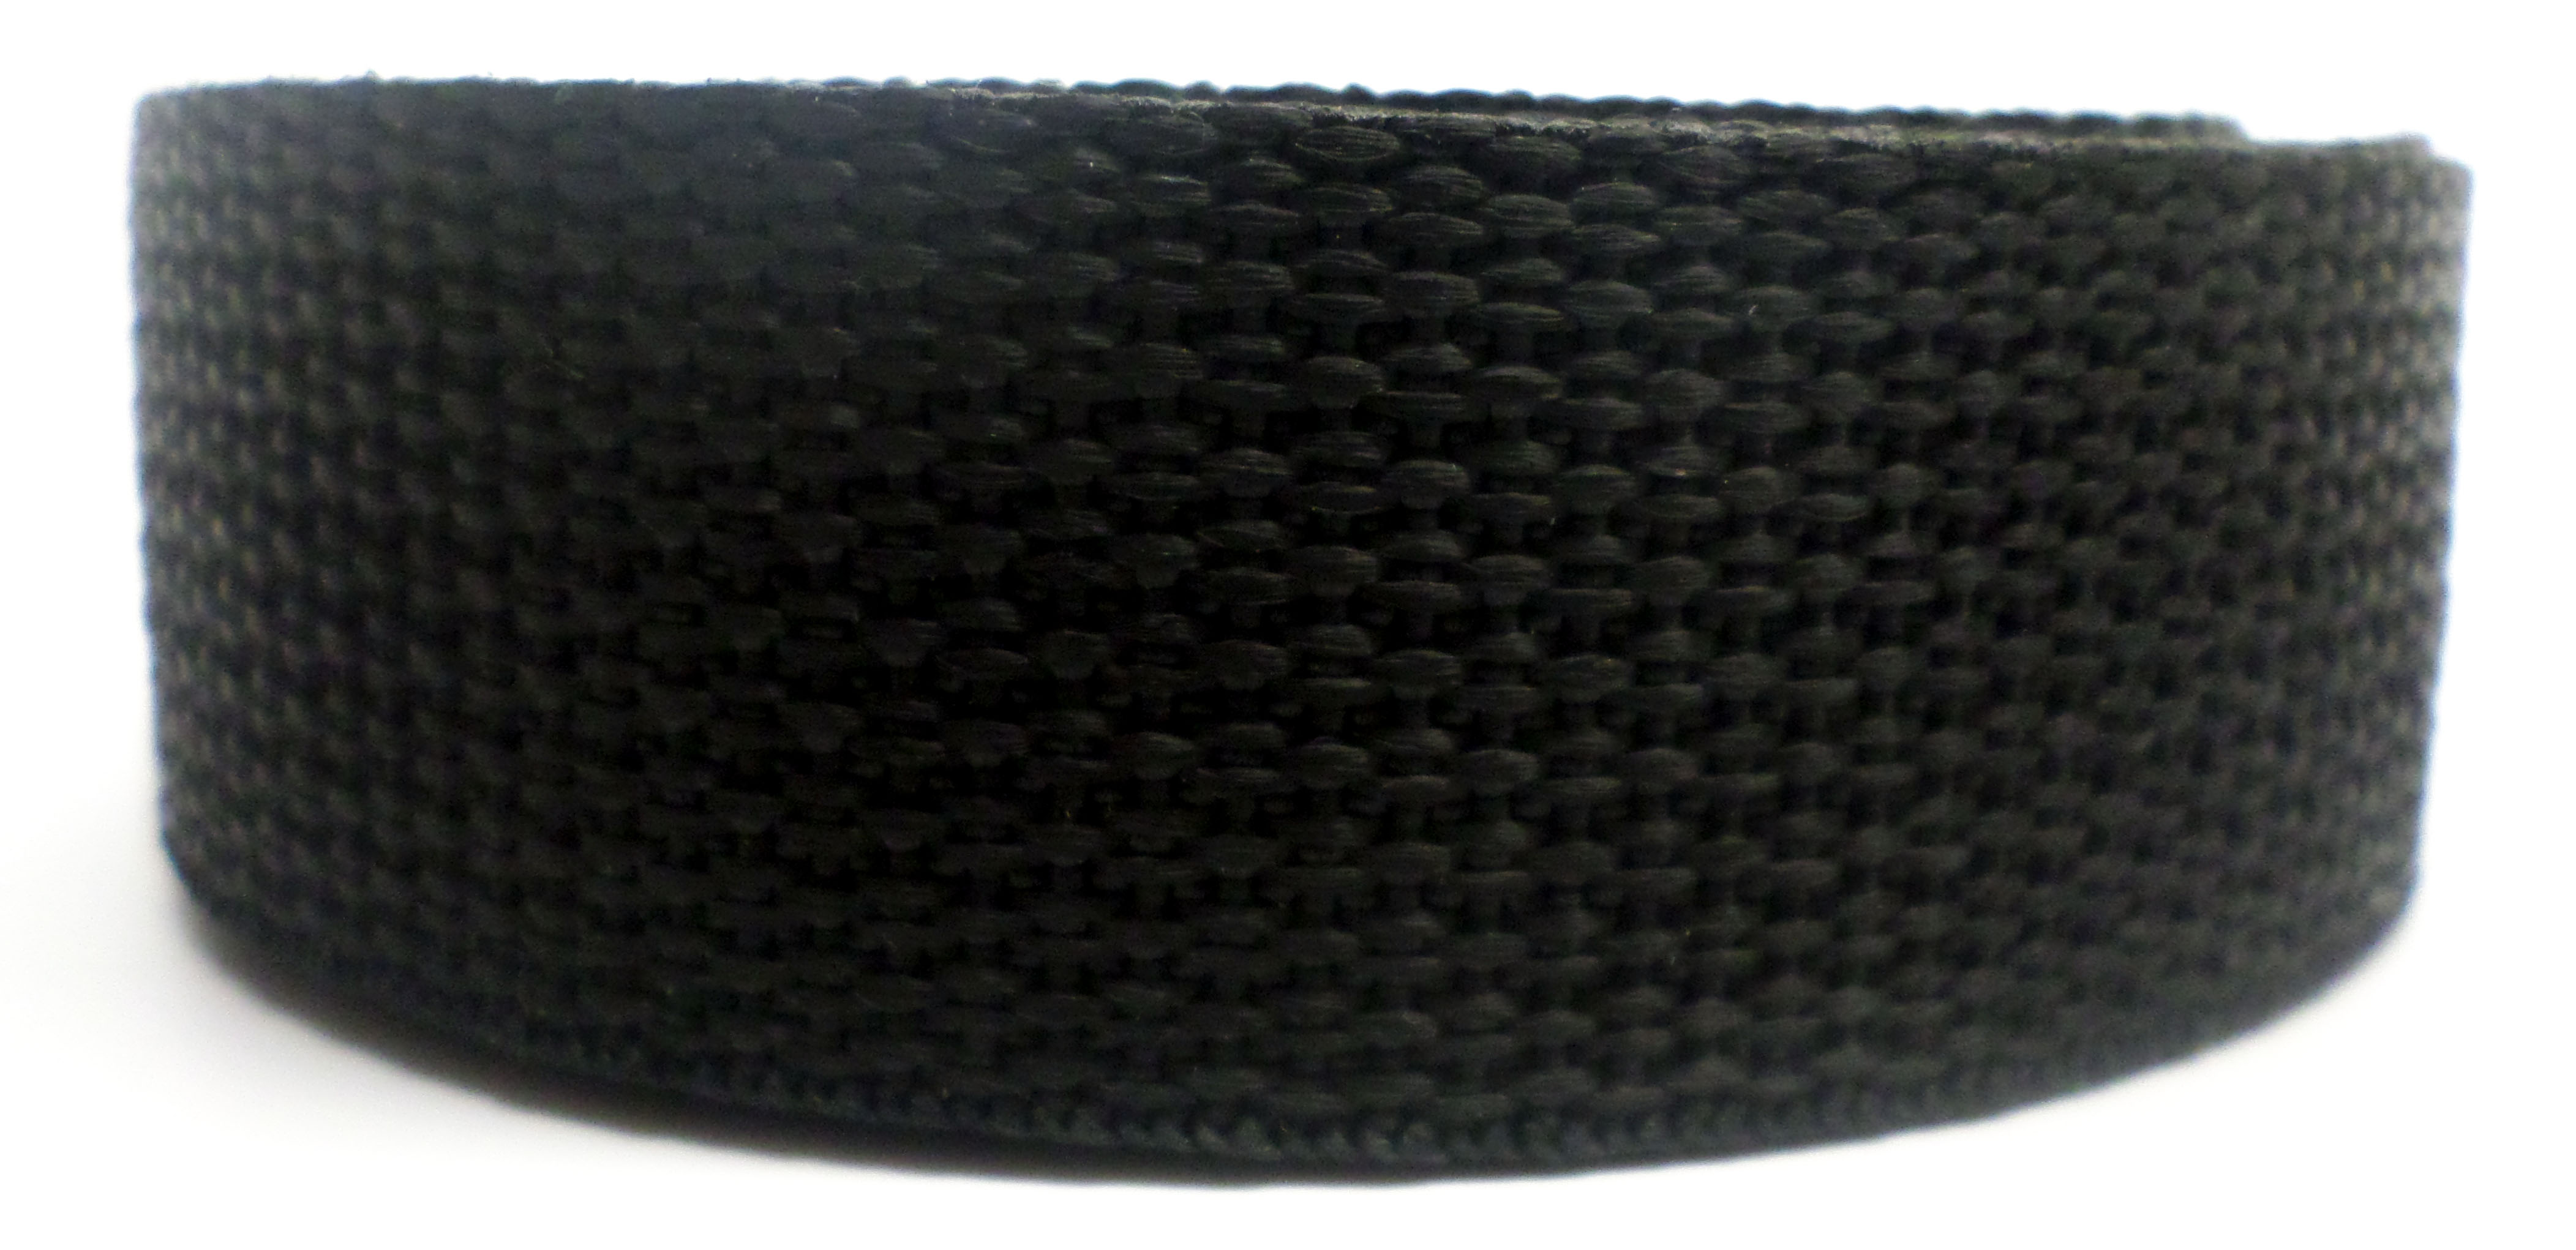 Spanband zwart op rol 10 mm 50 meter